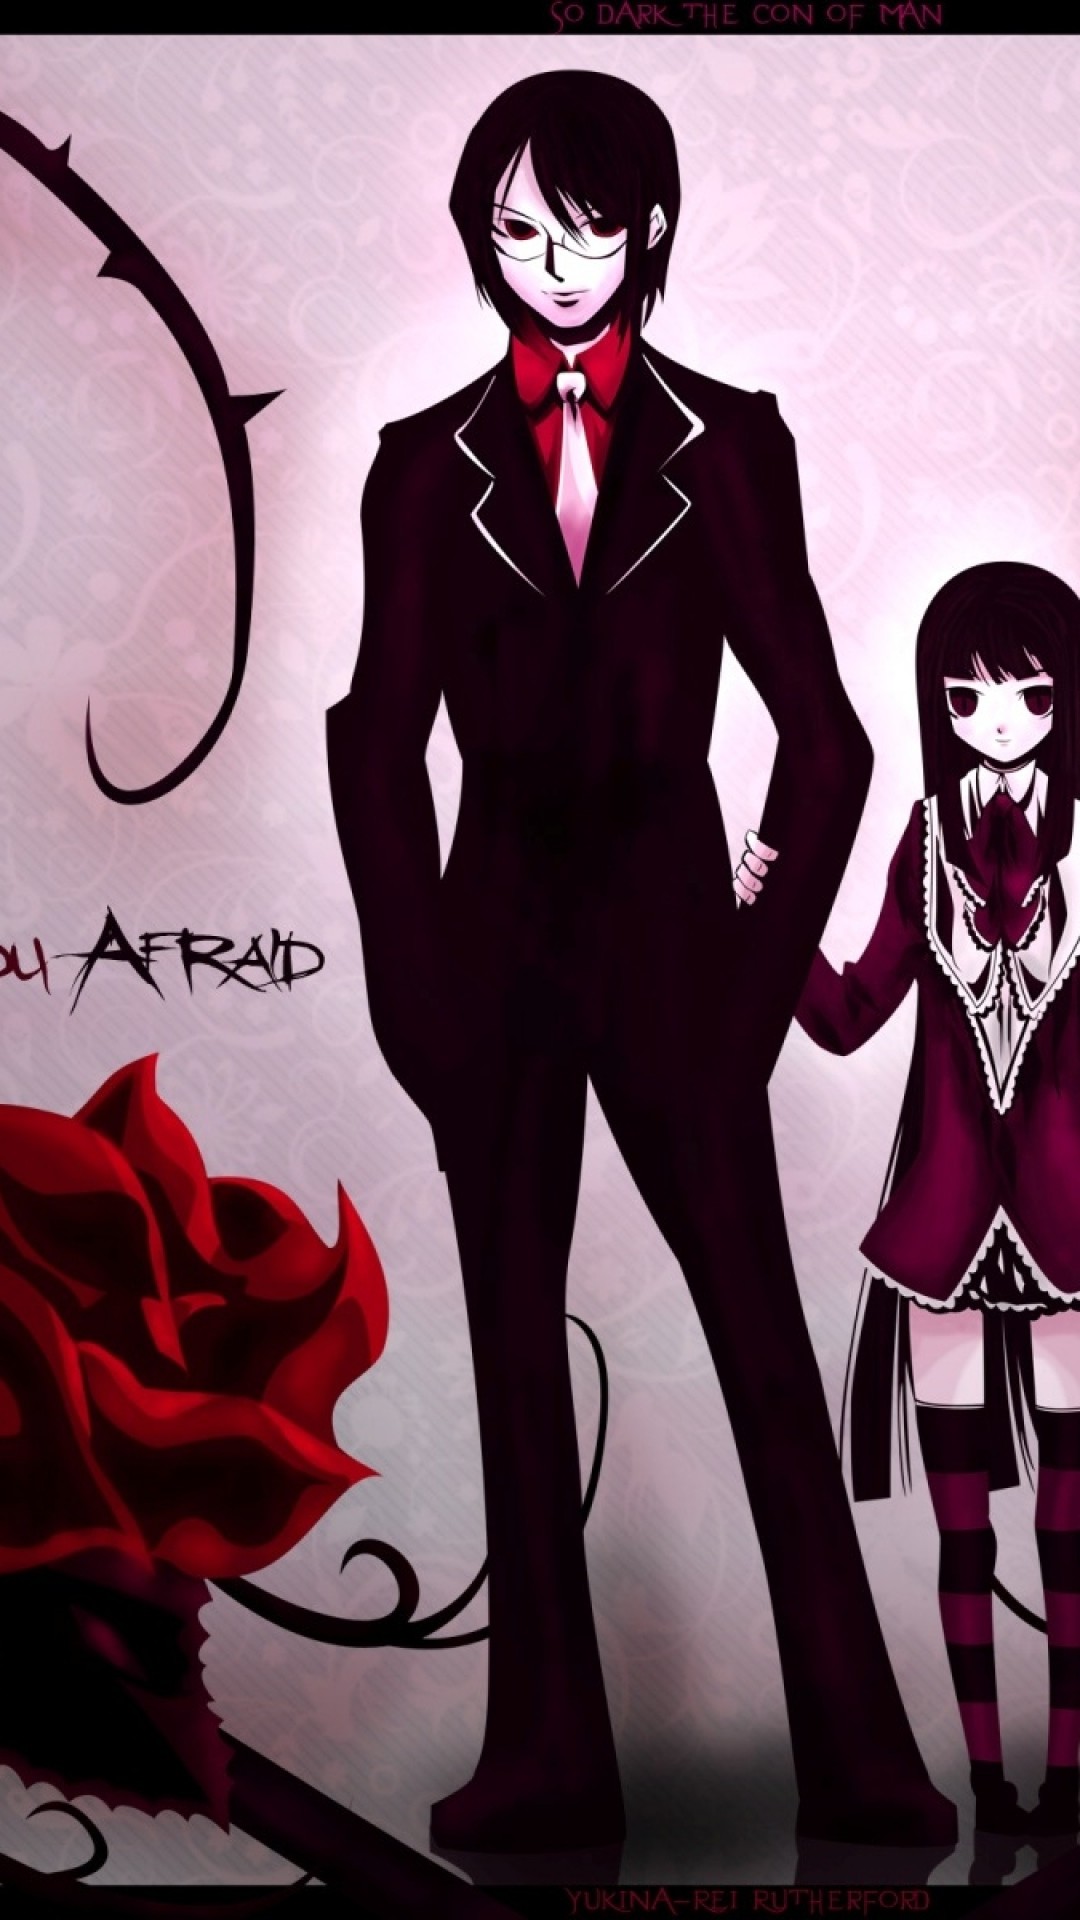 1080x1920  Wallpaper boy, dark anime, girl, rose, background